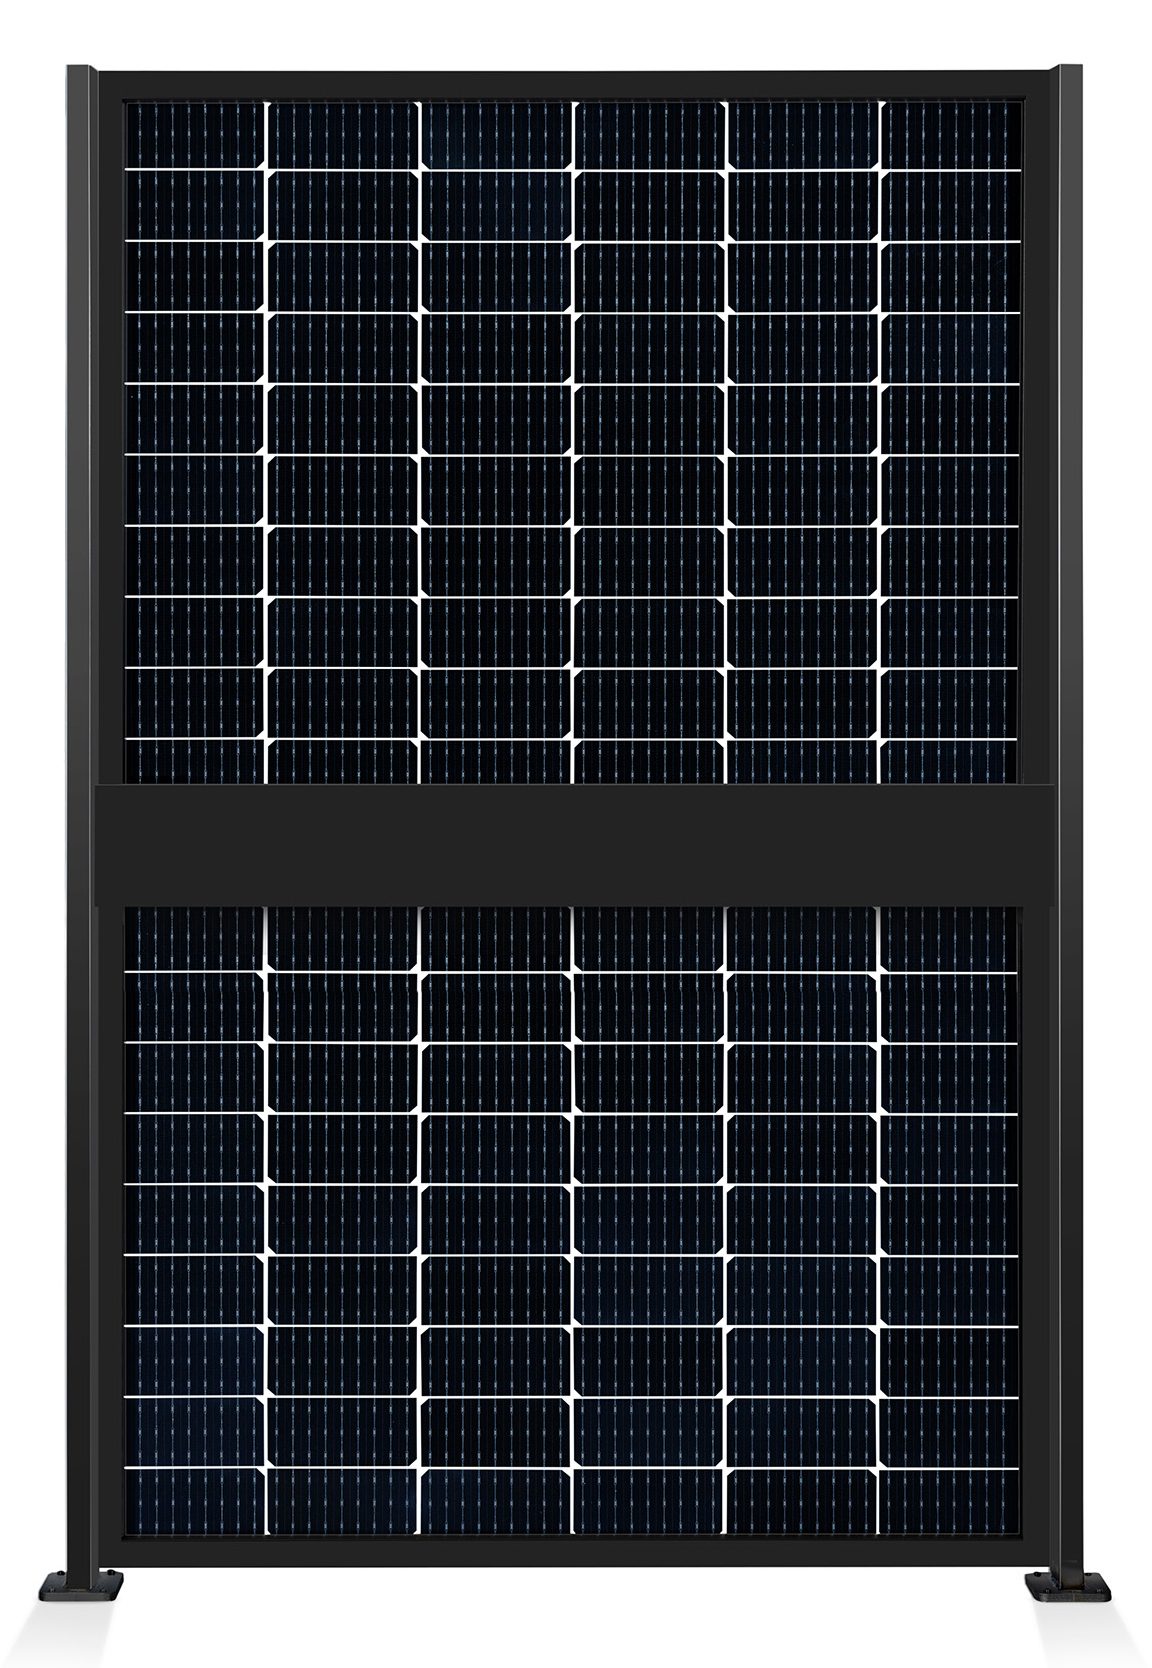 ausschnitt_0020_element-solar-sichtschutz-pv-photovoltaik-zaun-collection-hutter-panel-transparent-pfosten-schwarz-rueck